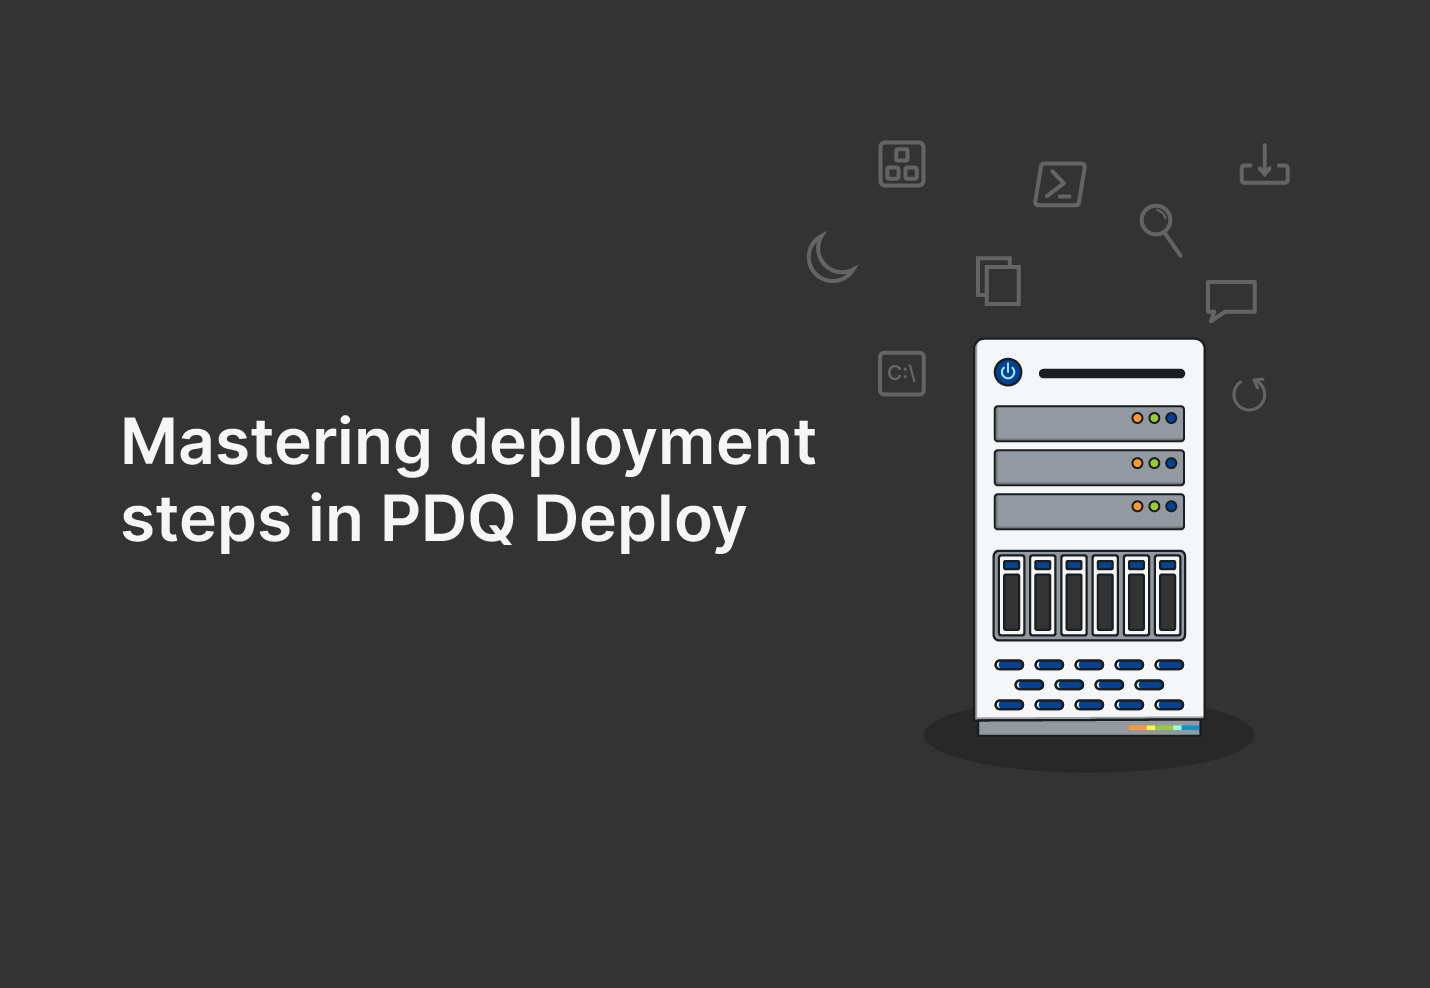 PDQ Deploy Enterprise 19.3.472.0 instal